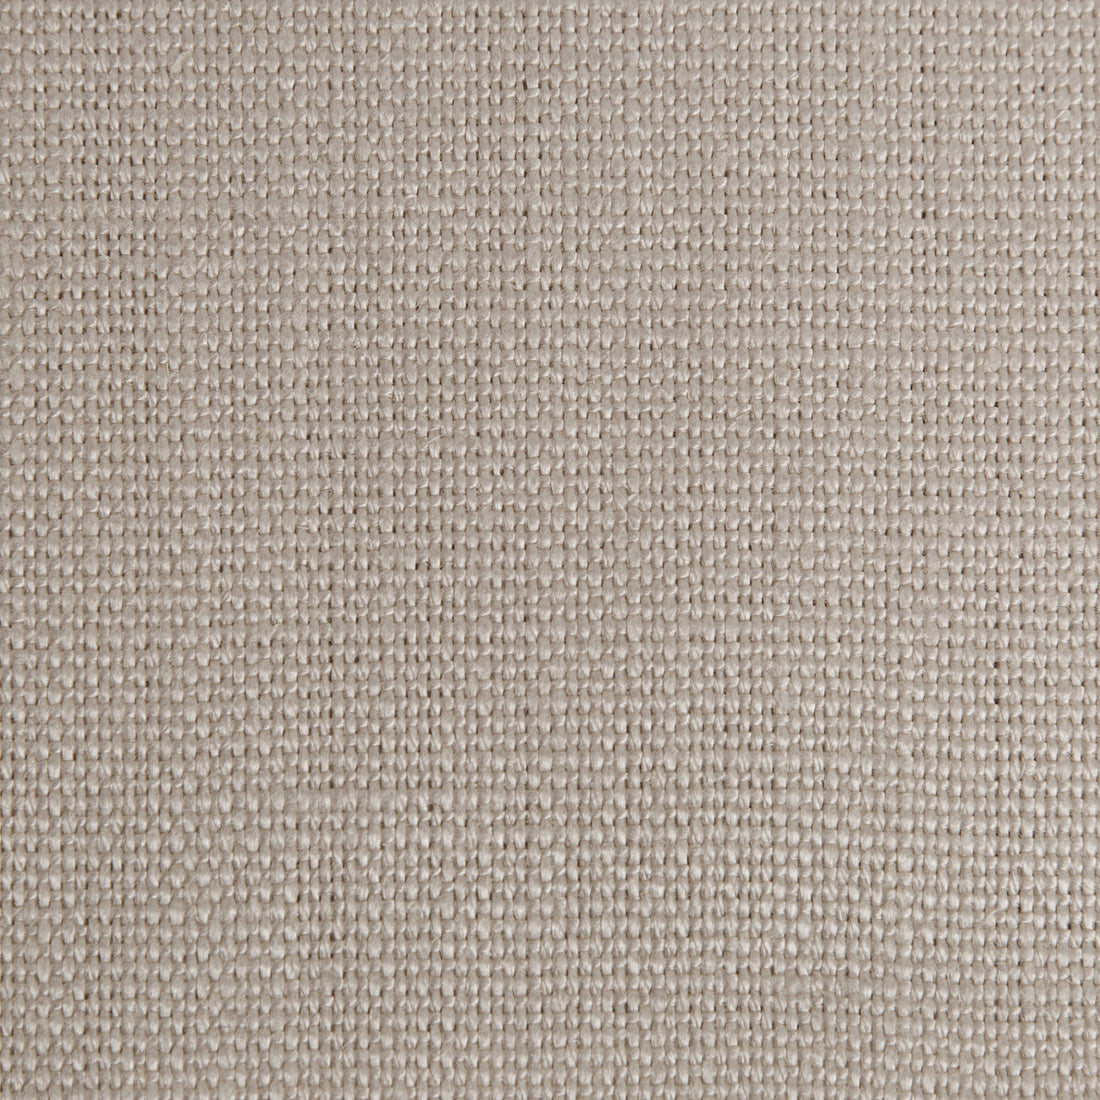 Stone Harbor fabric in blush color - pattern 27591.117.0 - by Kravet Basics